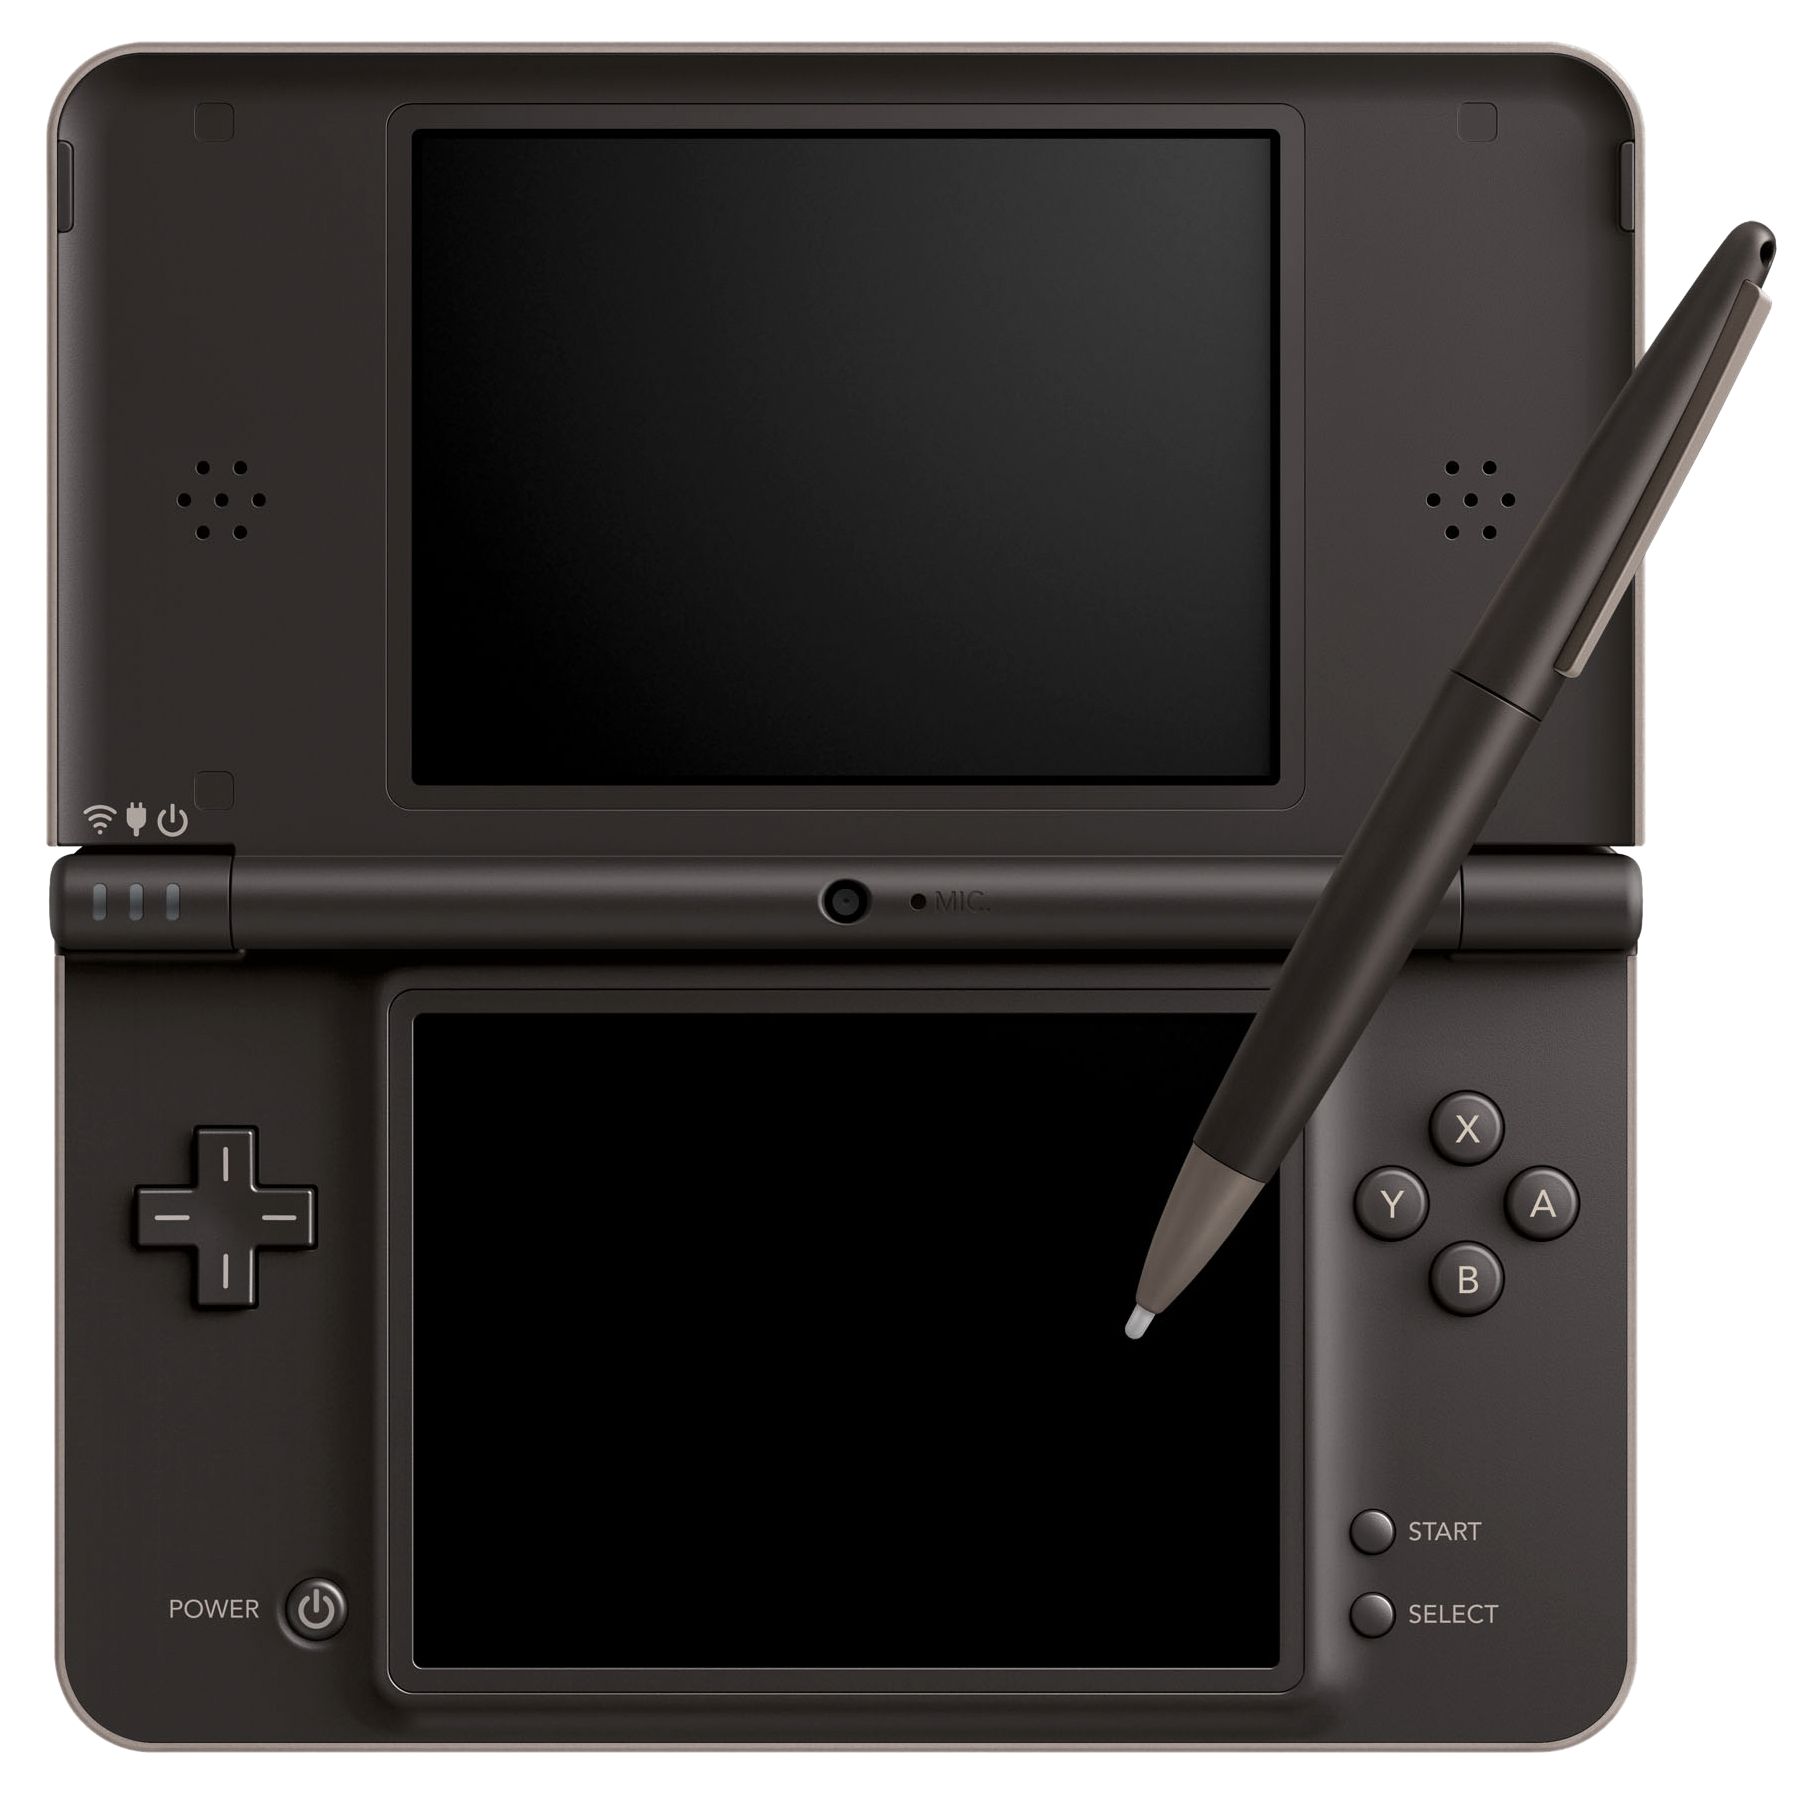 Nintendo DSi XL, Dark Brown, Accessory Pack & Picross 3D at JohnLewis